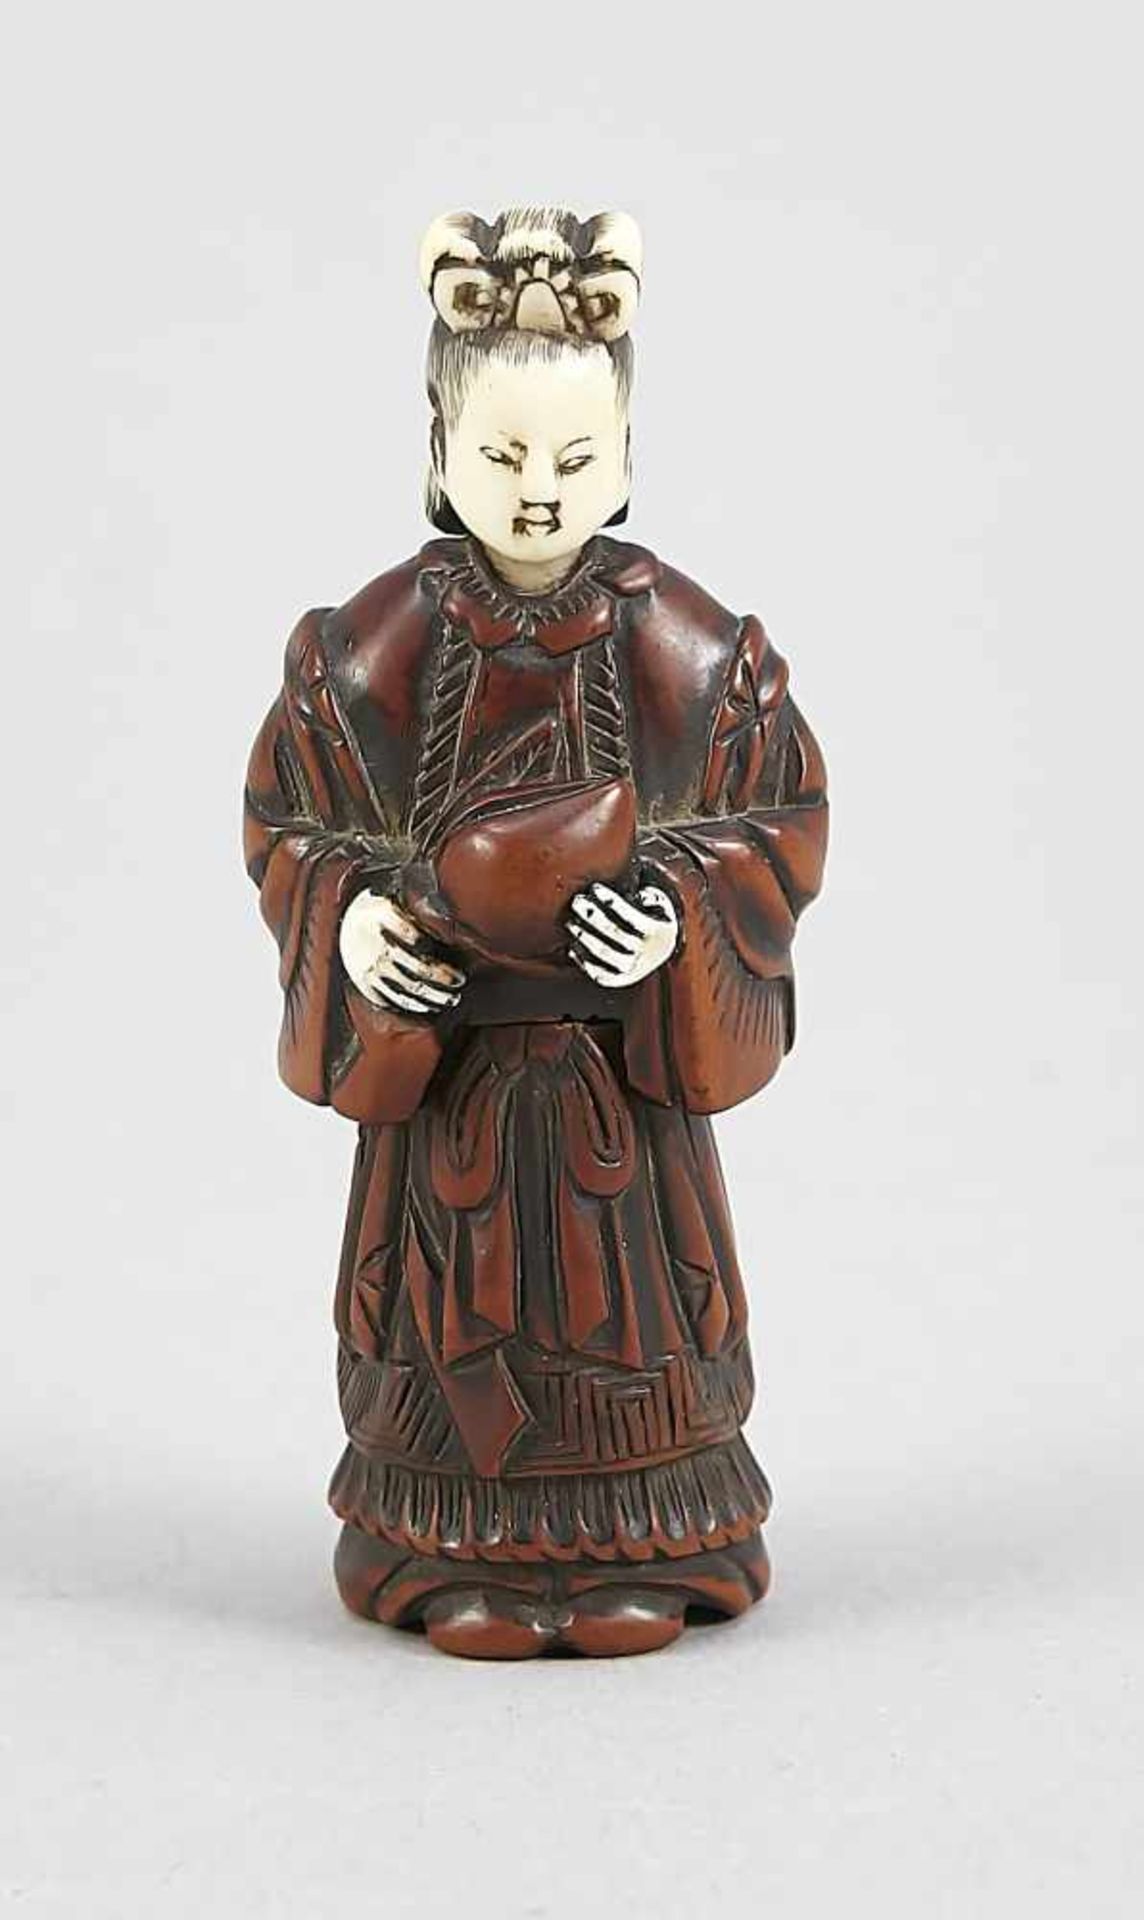 A Japanese shunga geisha(?) figure holding a peach, around 1900, boxtree and bone carved